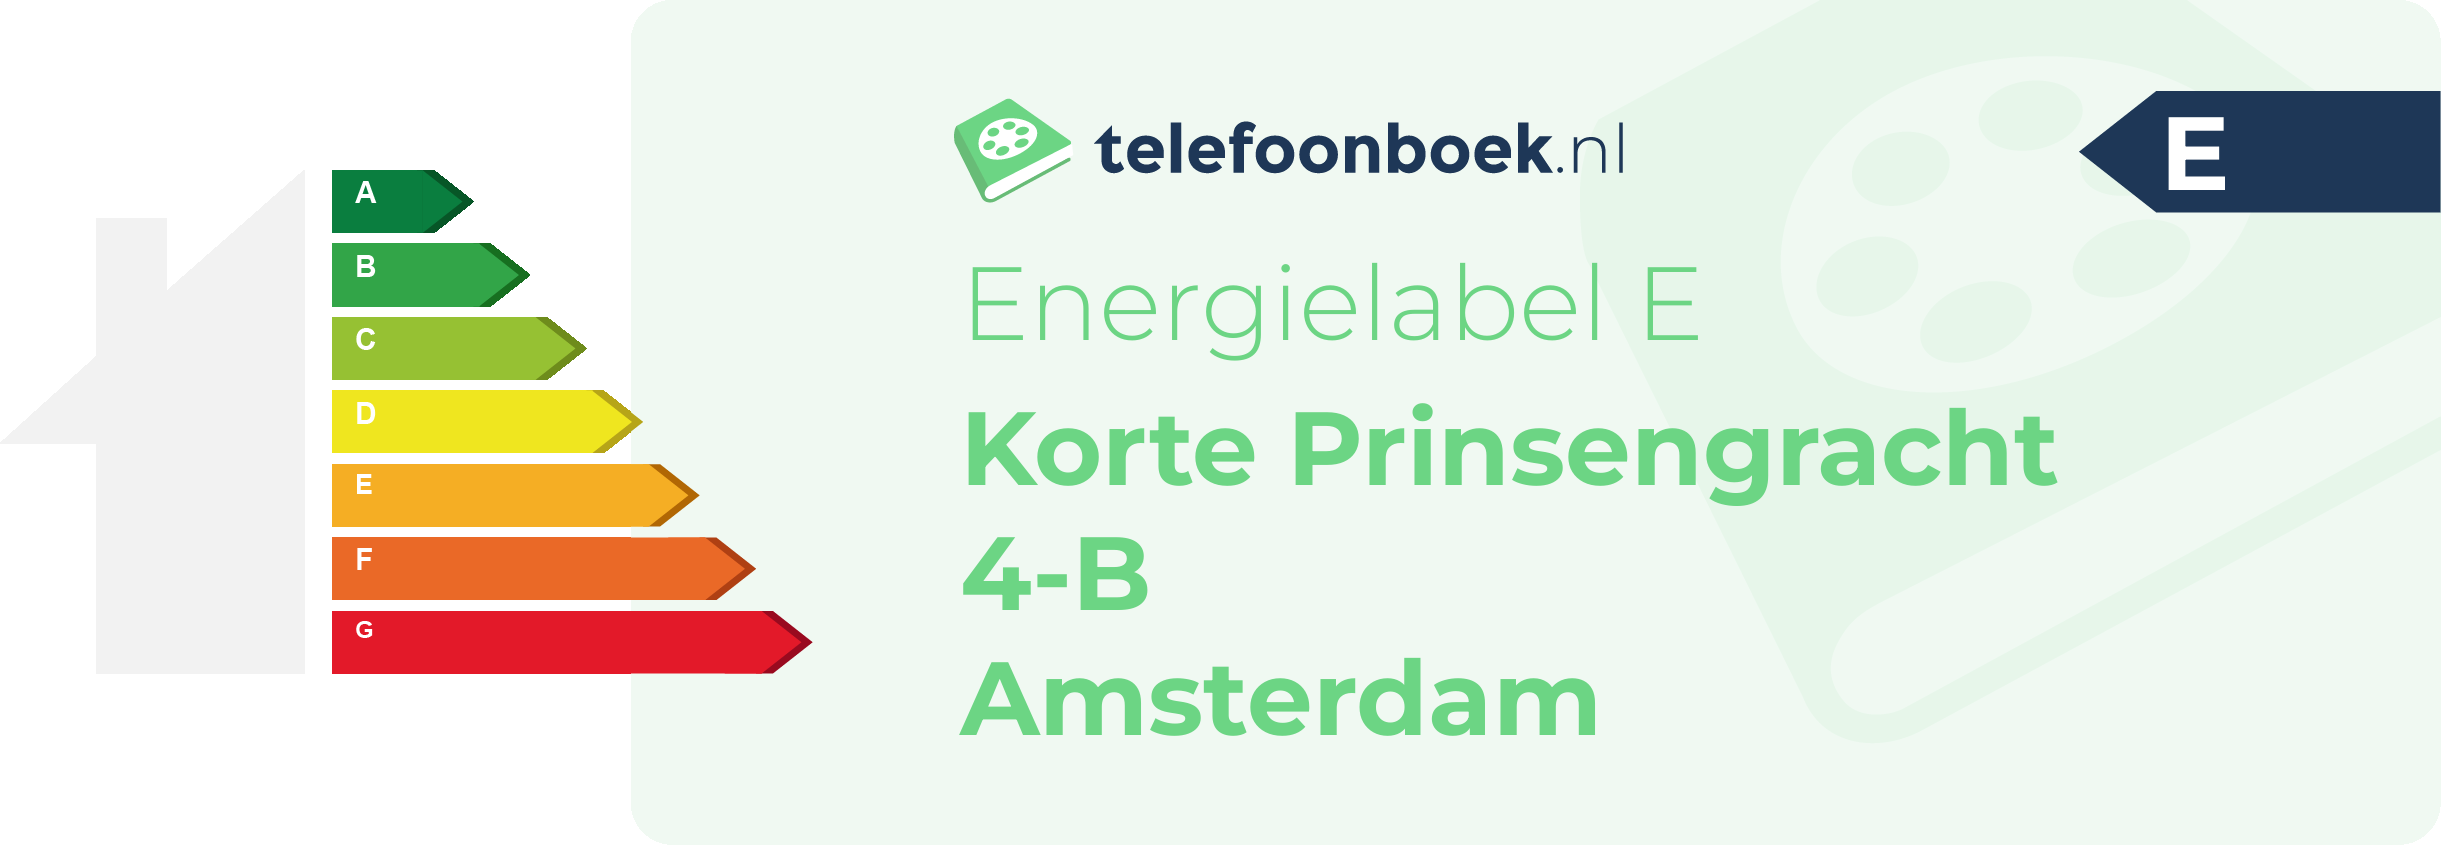 Energielabel Korte Prinsengracht 4-B Amsterdam